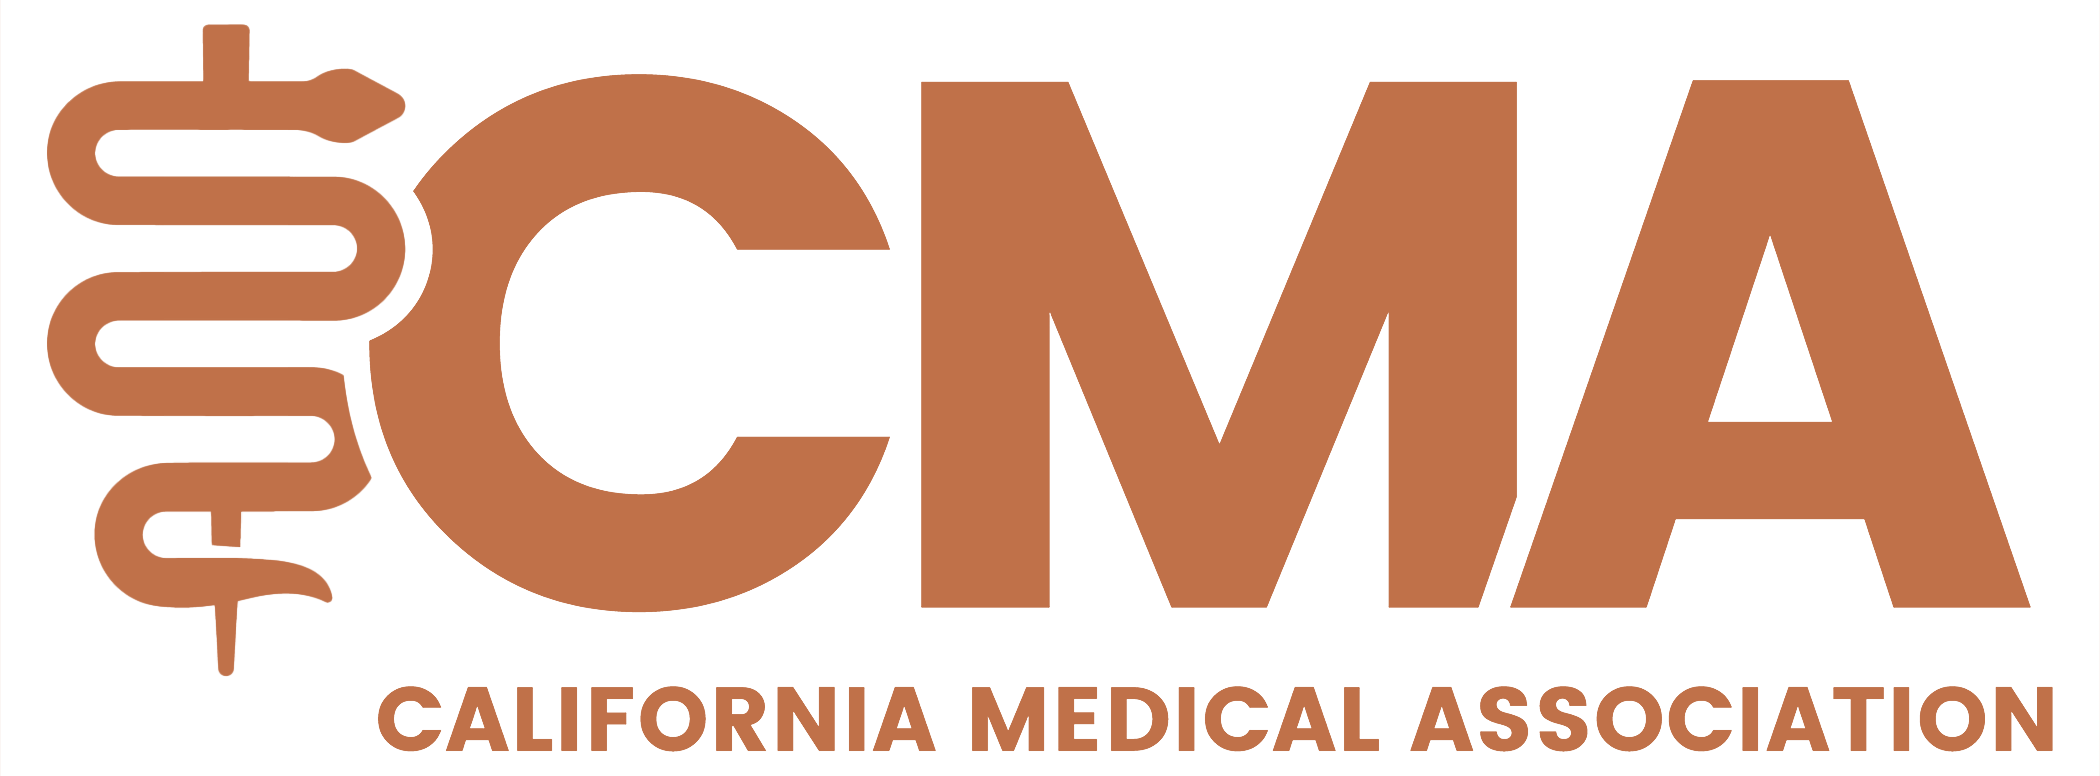 California Medical Association logo